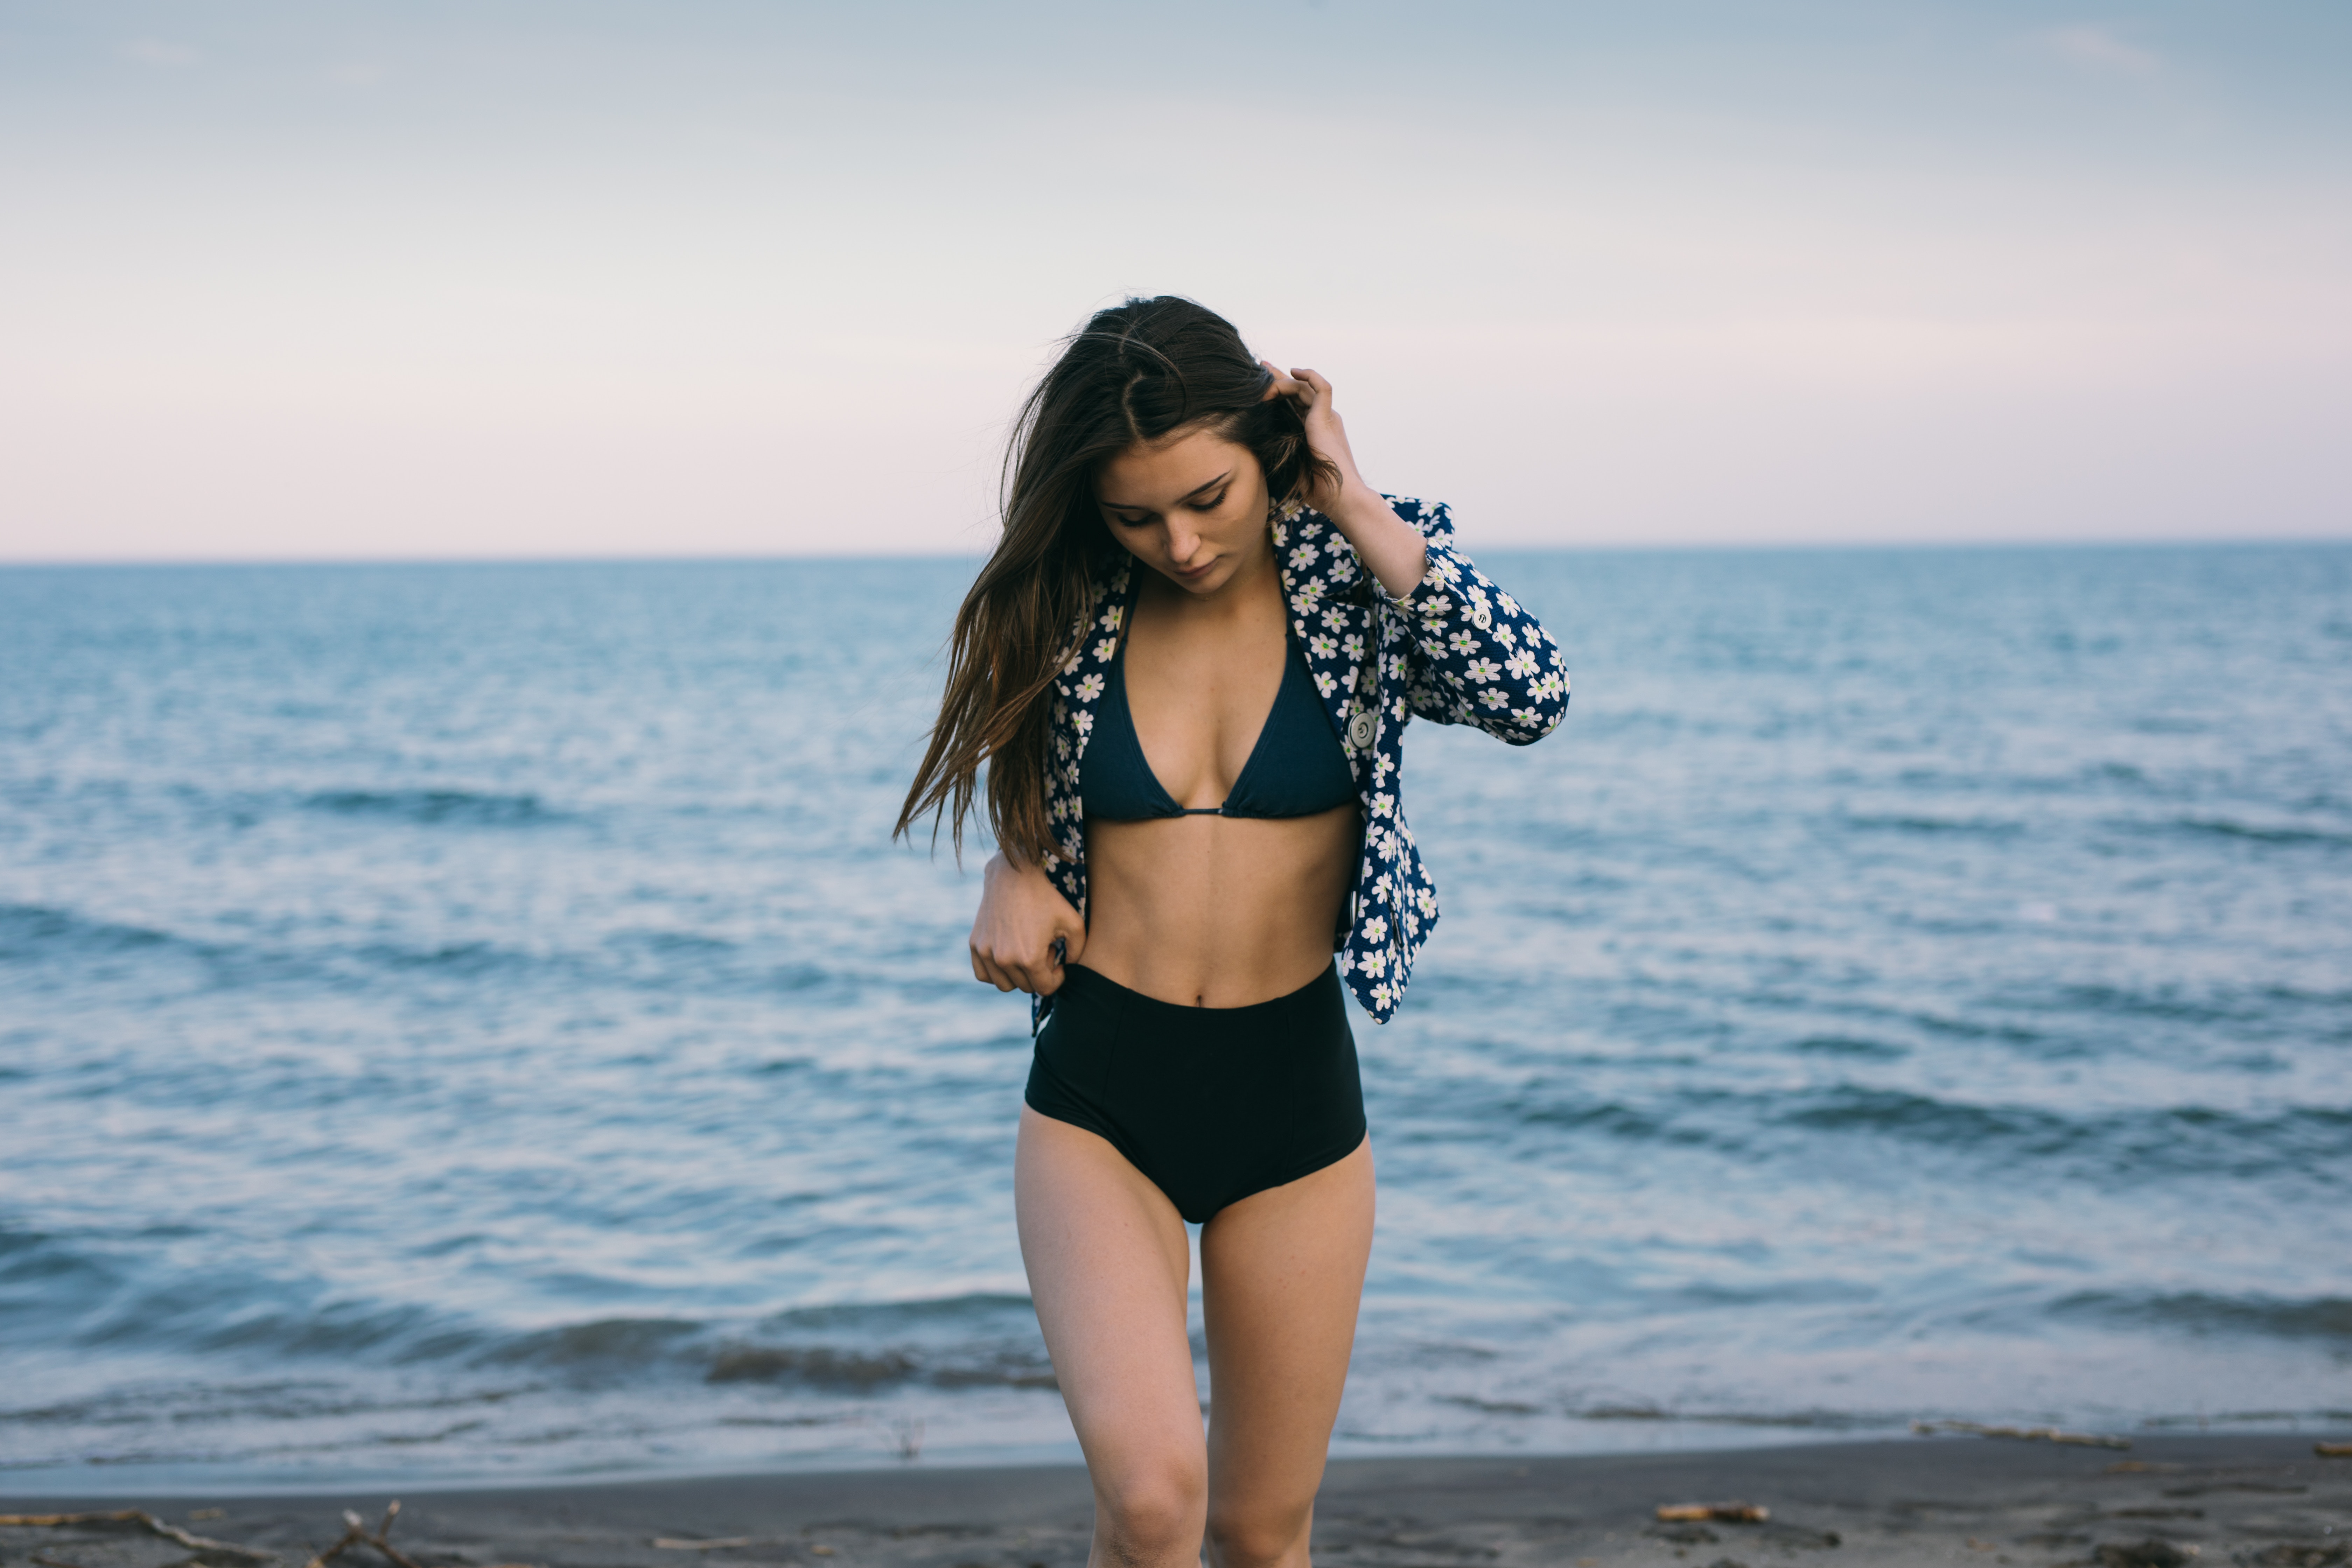 A Simple Swimsuit: Target Women's Blocked Trim Ribbed Bikini Top